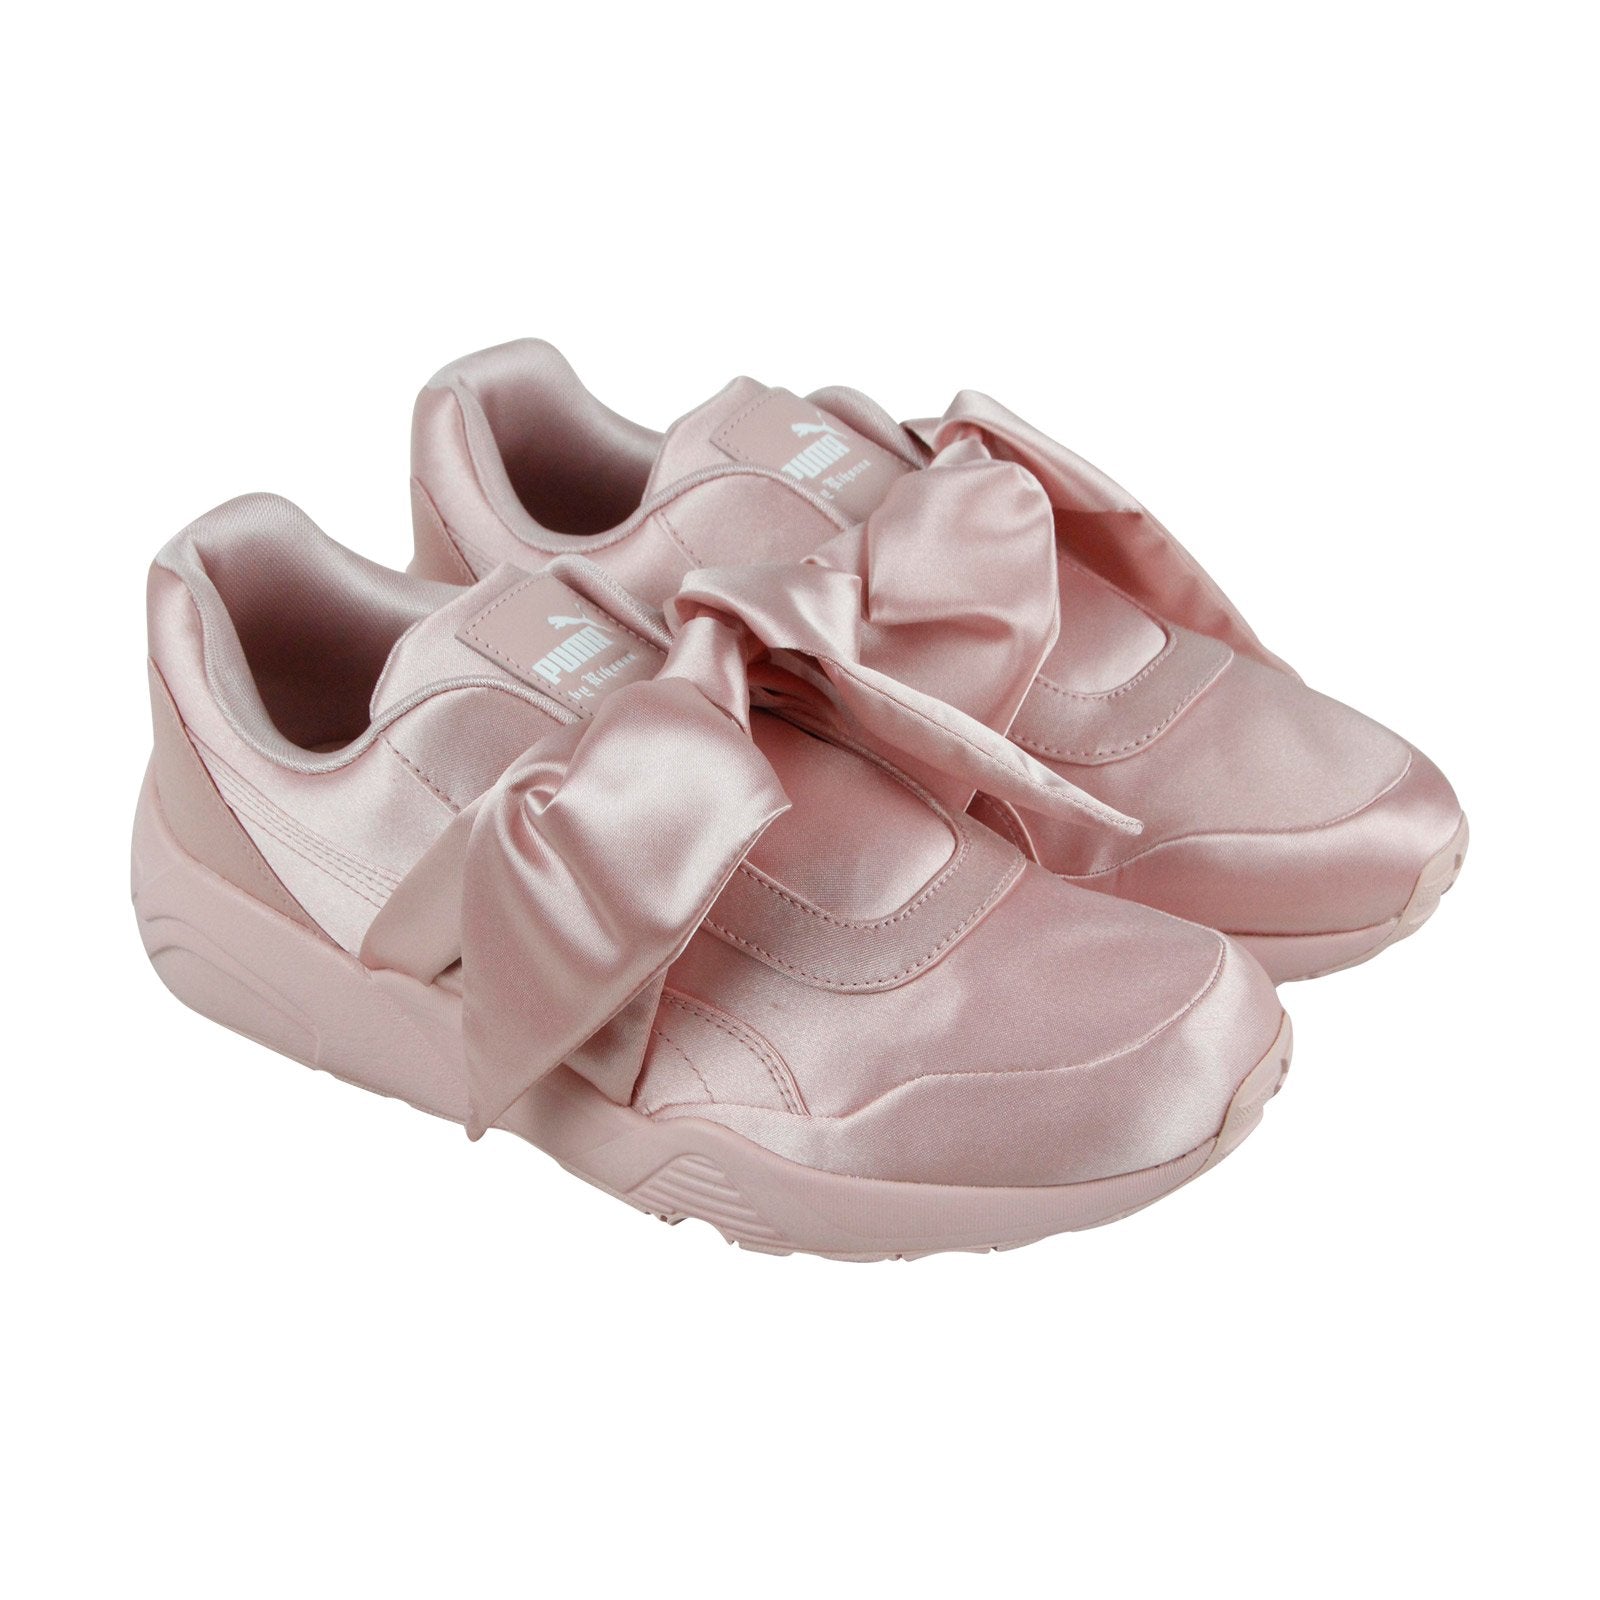 Puma Fenty By Bow Sneaker 36505401 Womens Pink Canvas Sneakers - Ruze